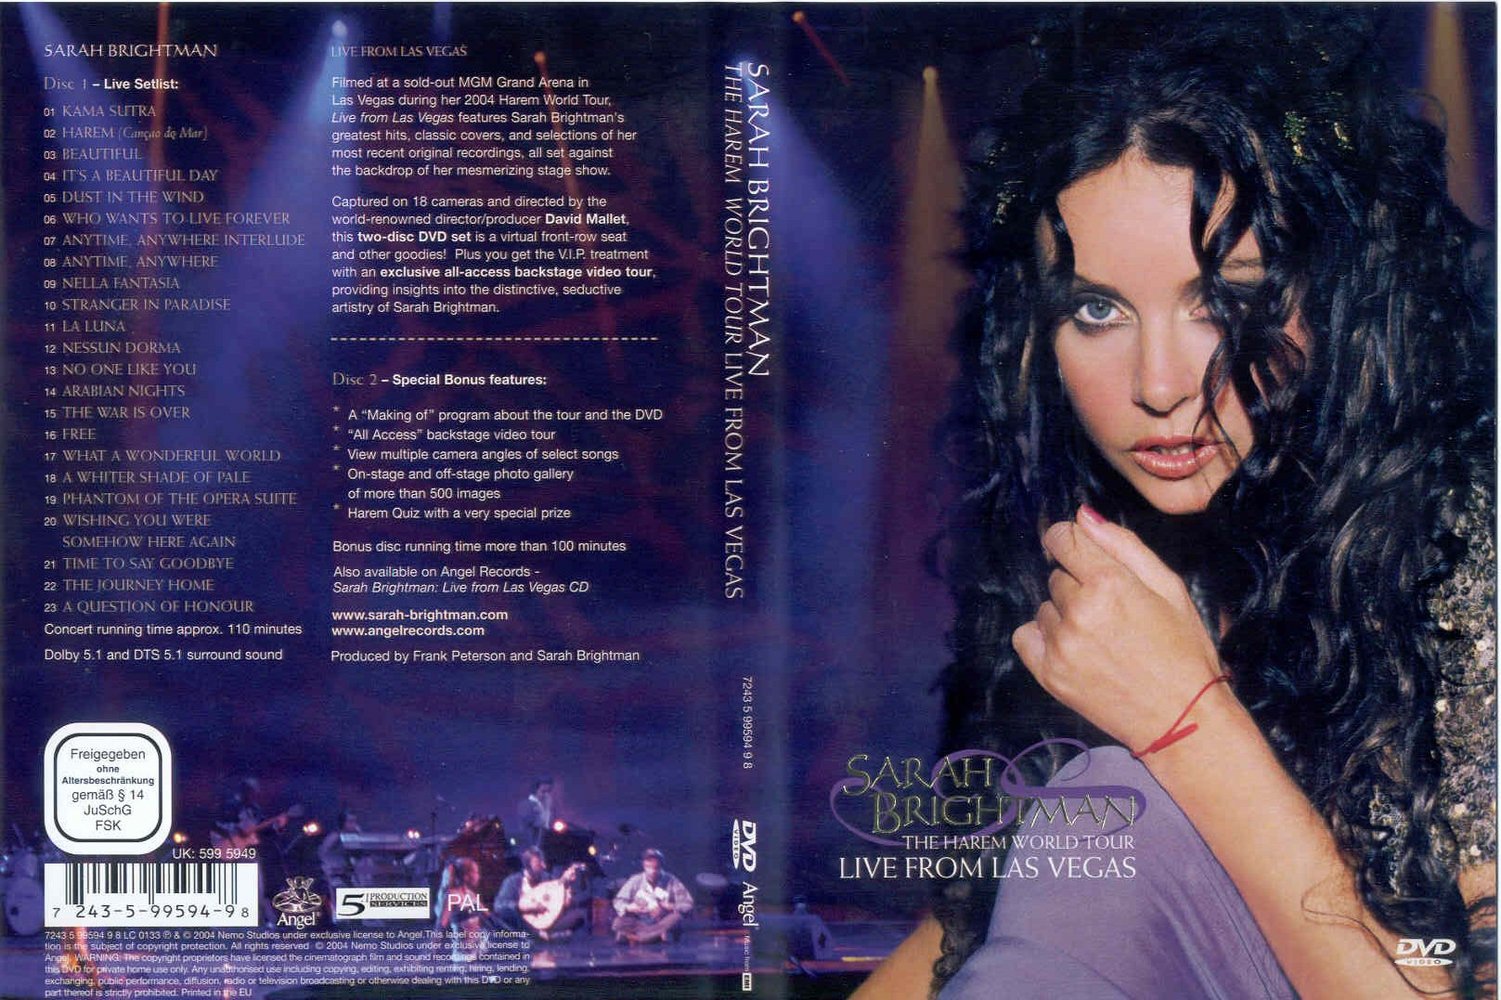 Jaquette DVD Sarah Brightman Live from Las Vegas